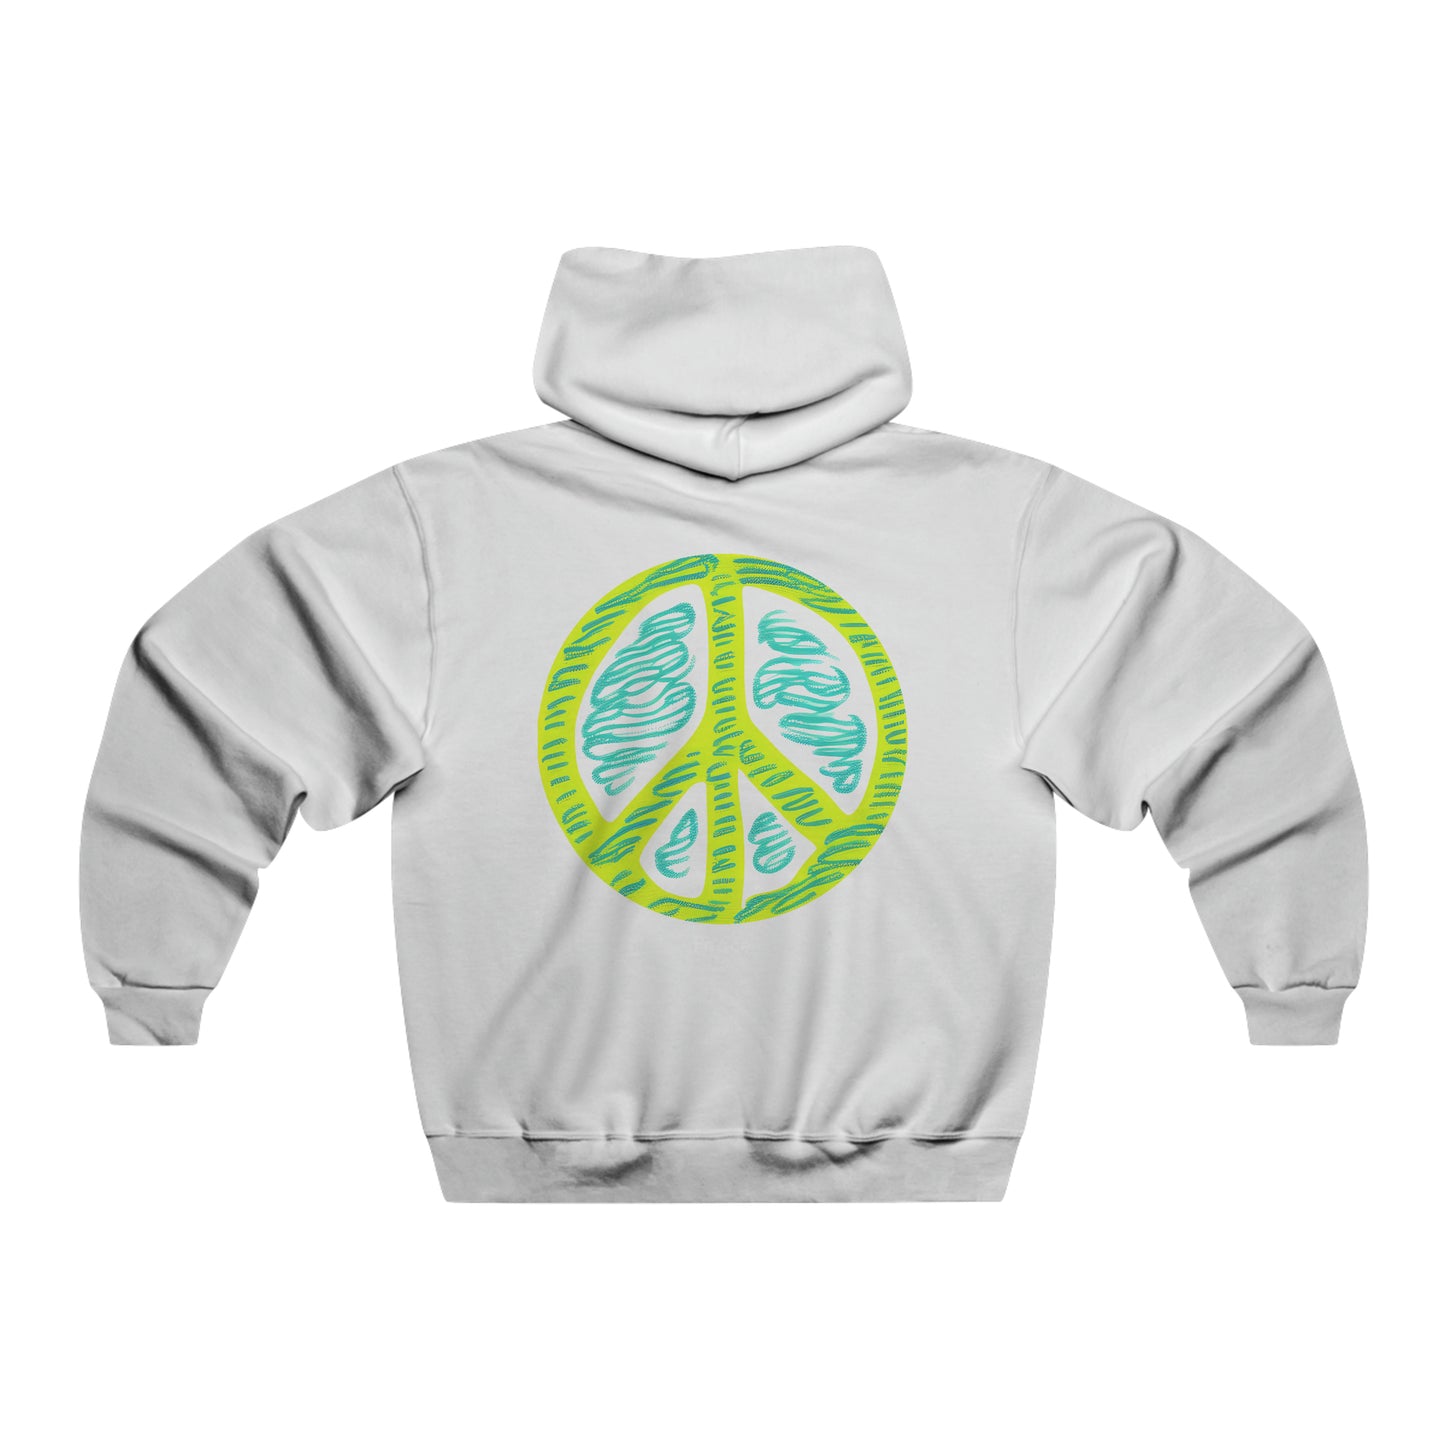 Tranquil Harmony: Minimalist Peace Sign Hooded Sweatshirt for Men